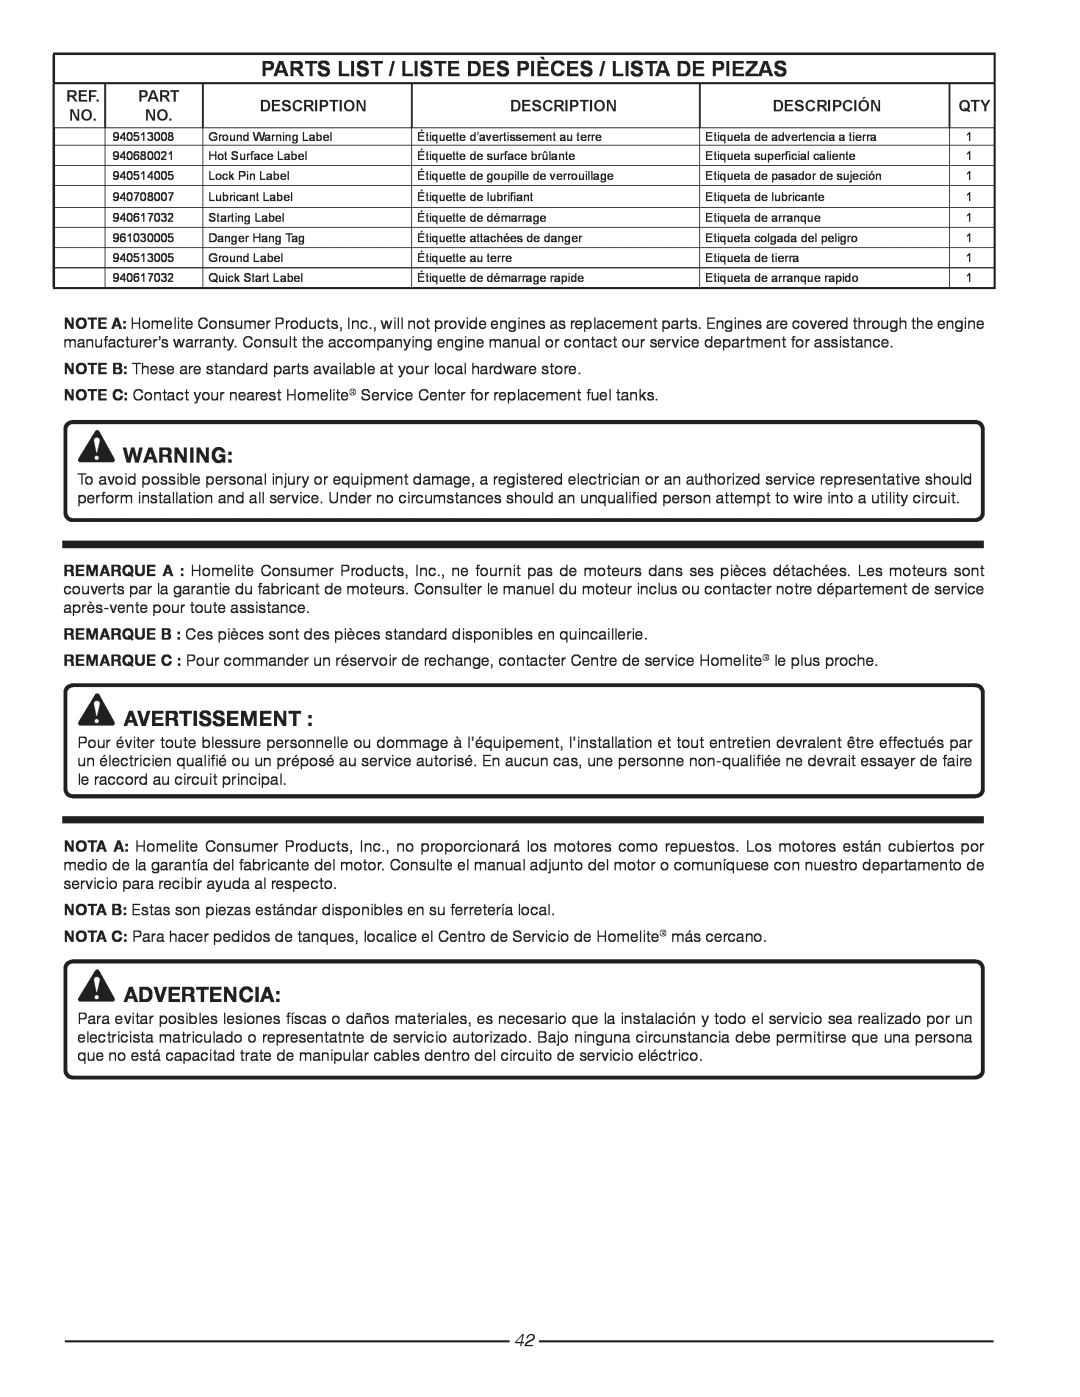 Homelite HG3510 avertissement, Parts List / Liste Des Pièces / Lista De Piezas, advertencia, Description, Descripción 